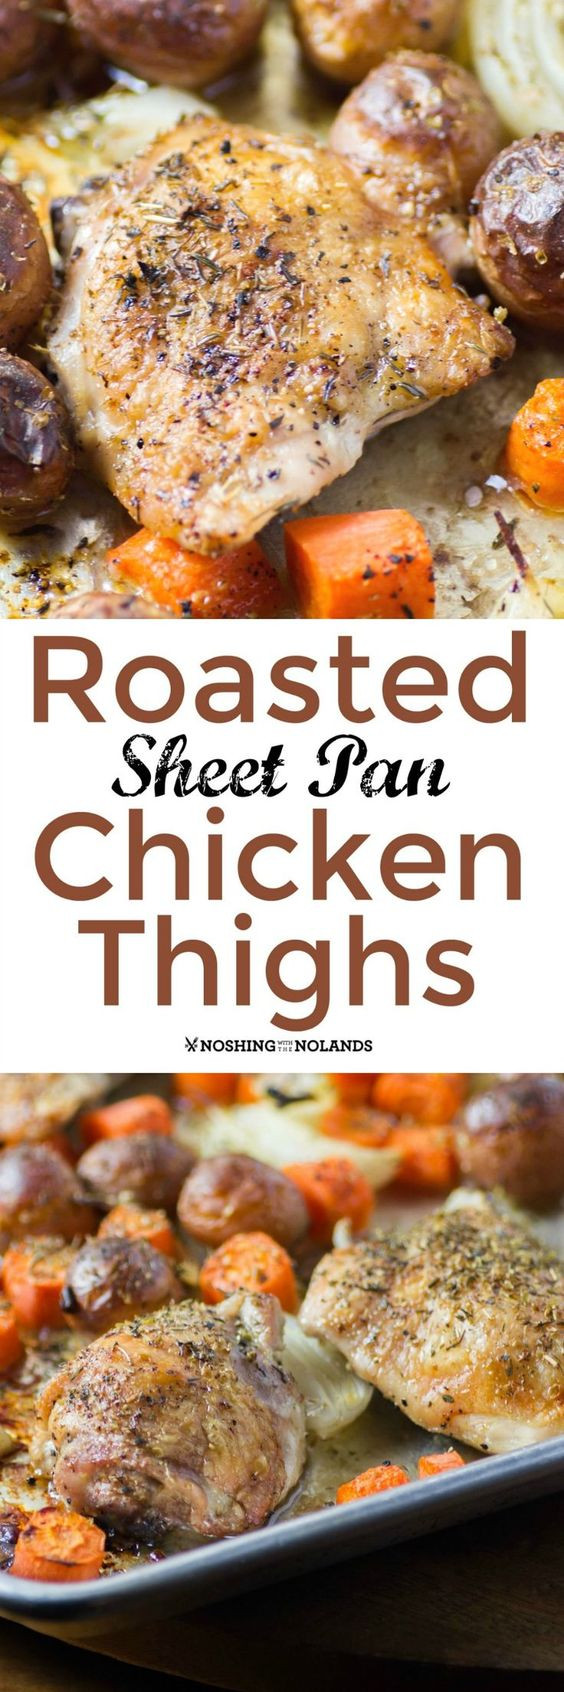 Sheet Pan Boneless Chicken Thighs
 Roasted Sheet Pan Chicken Thighs